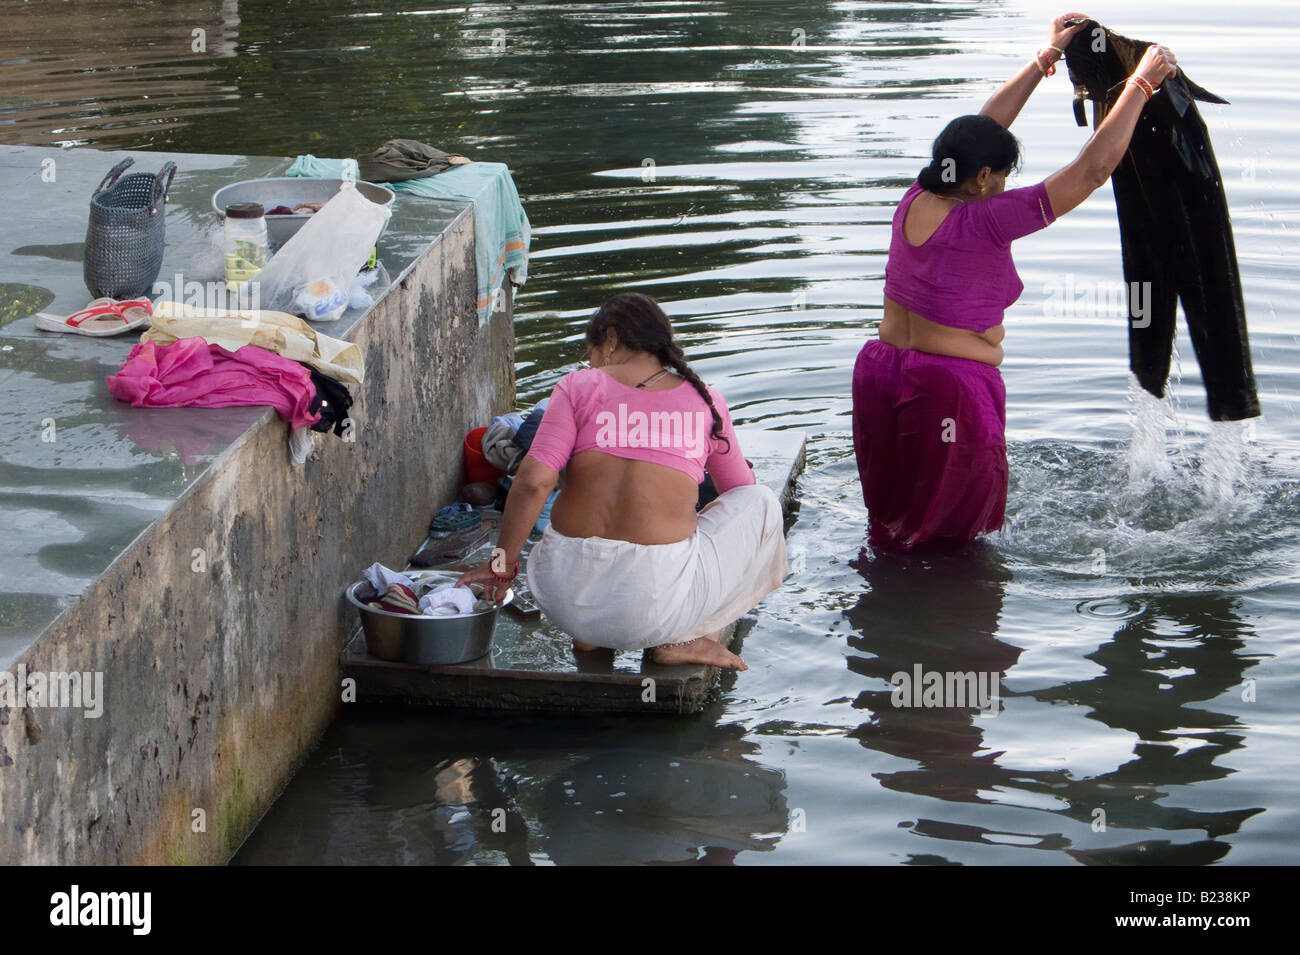 Bathing women lake pichola rajasthan hi-res stock photography and images -  Alamy